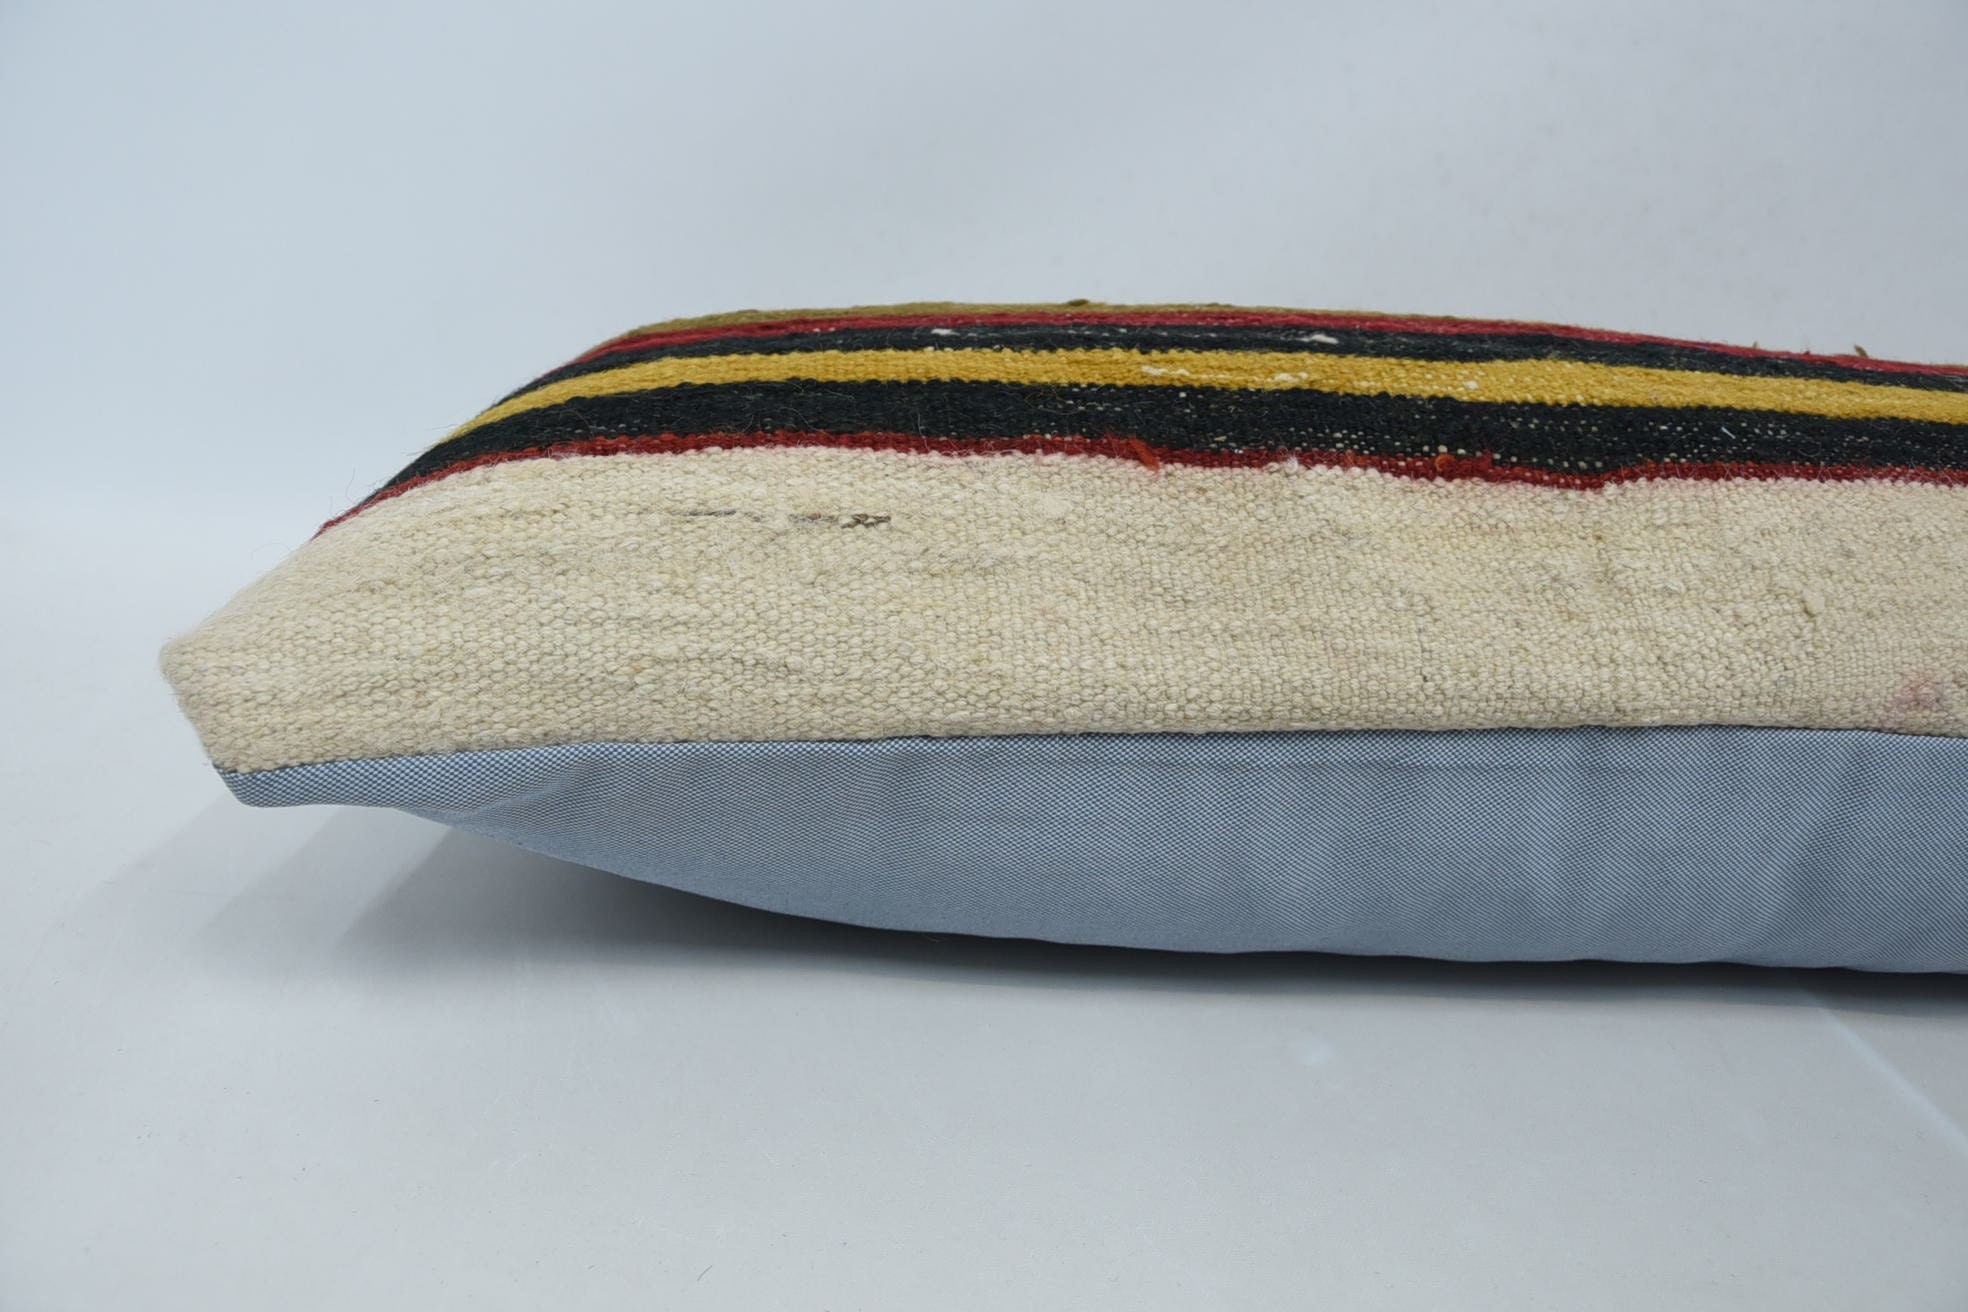 Aztec Pillow, Interior Designer Pillow, 16"x48" Red Pillow Case, Vintage Kilim Pillow, Ethnical Kilim Rug Pillow, Yoga Cushion